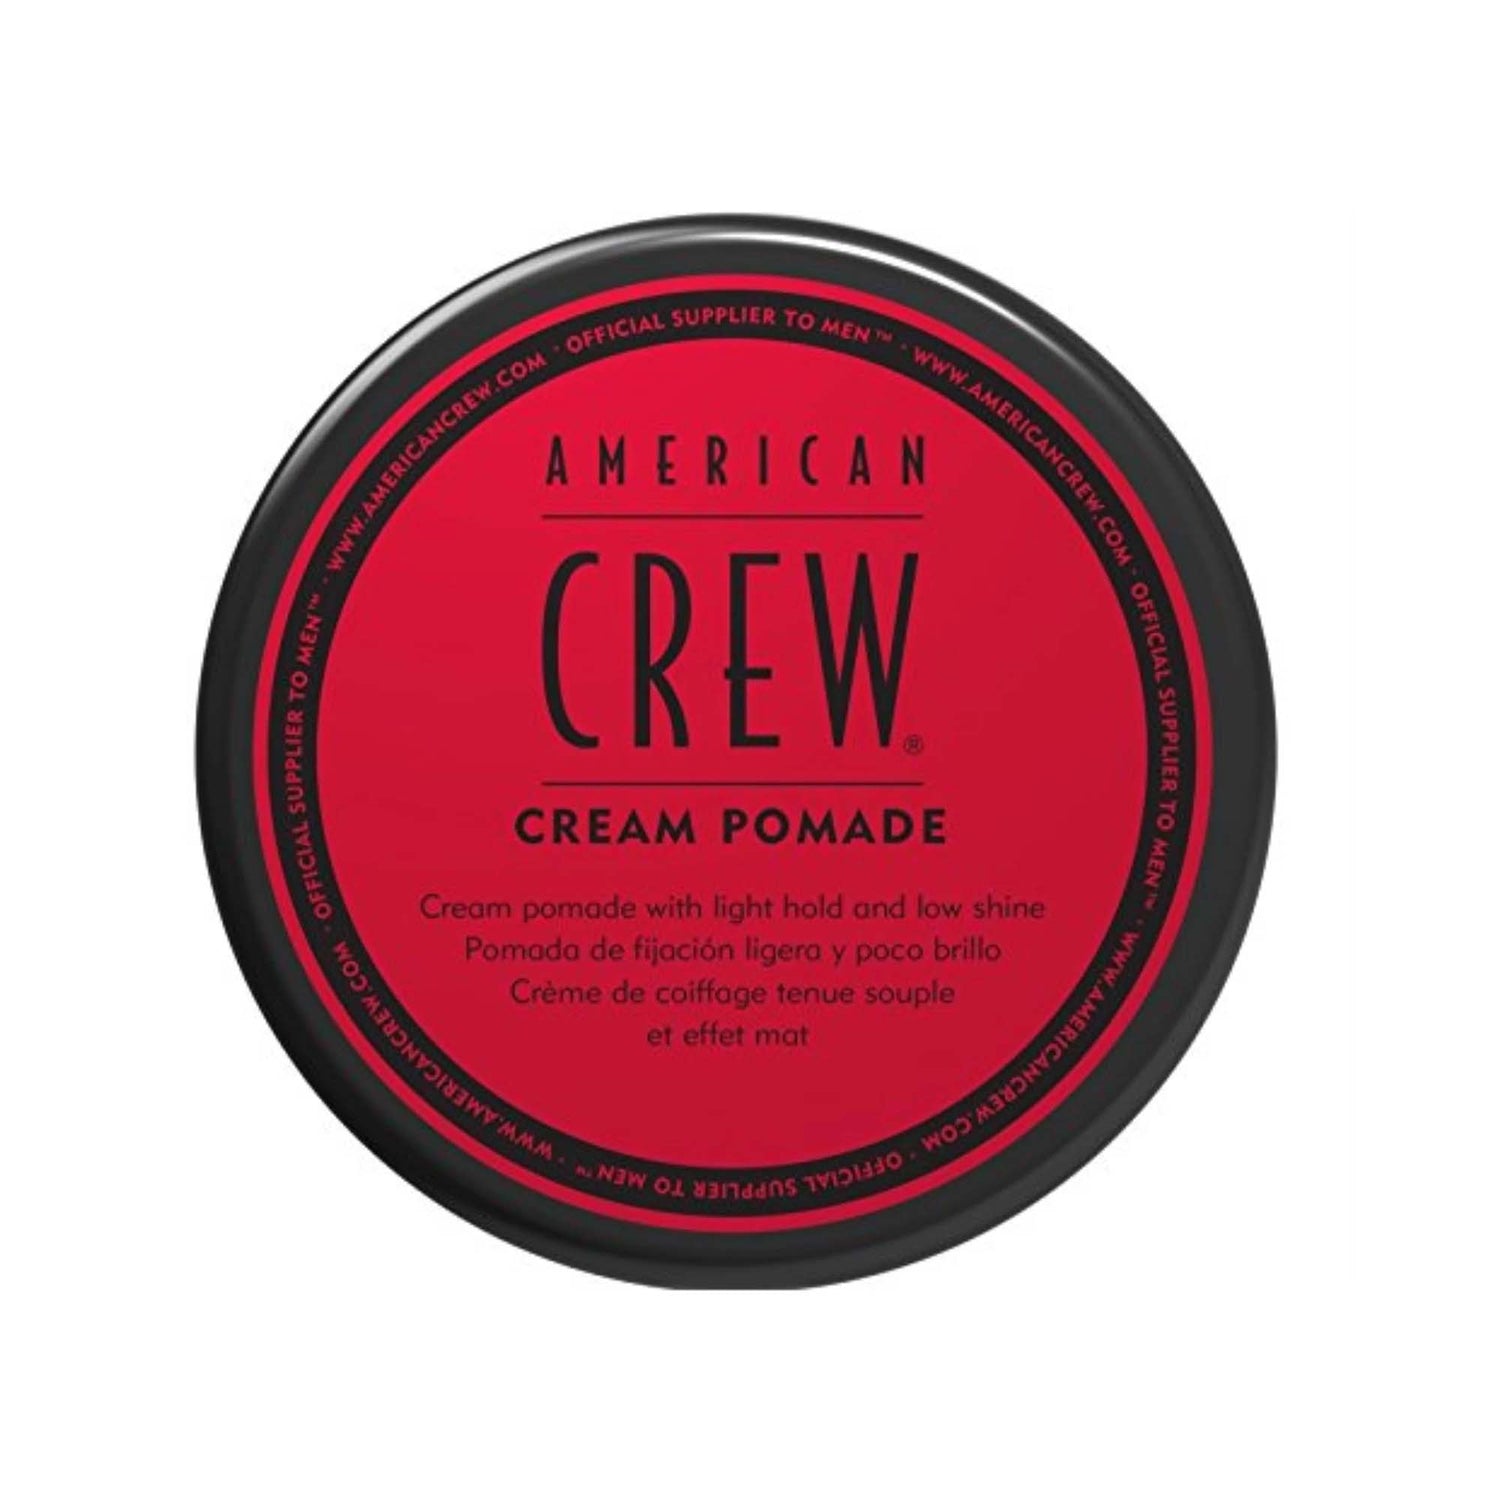 American Crew Cream Pomade 3oz